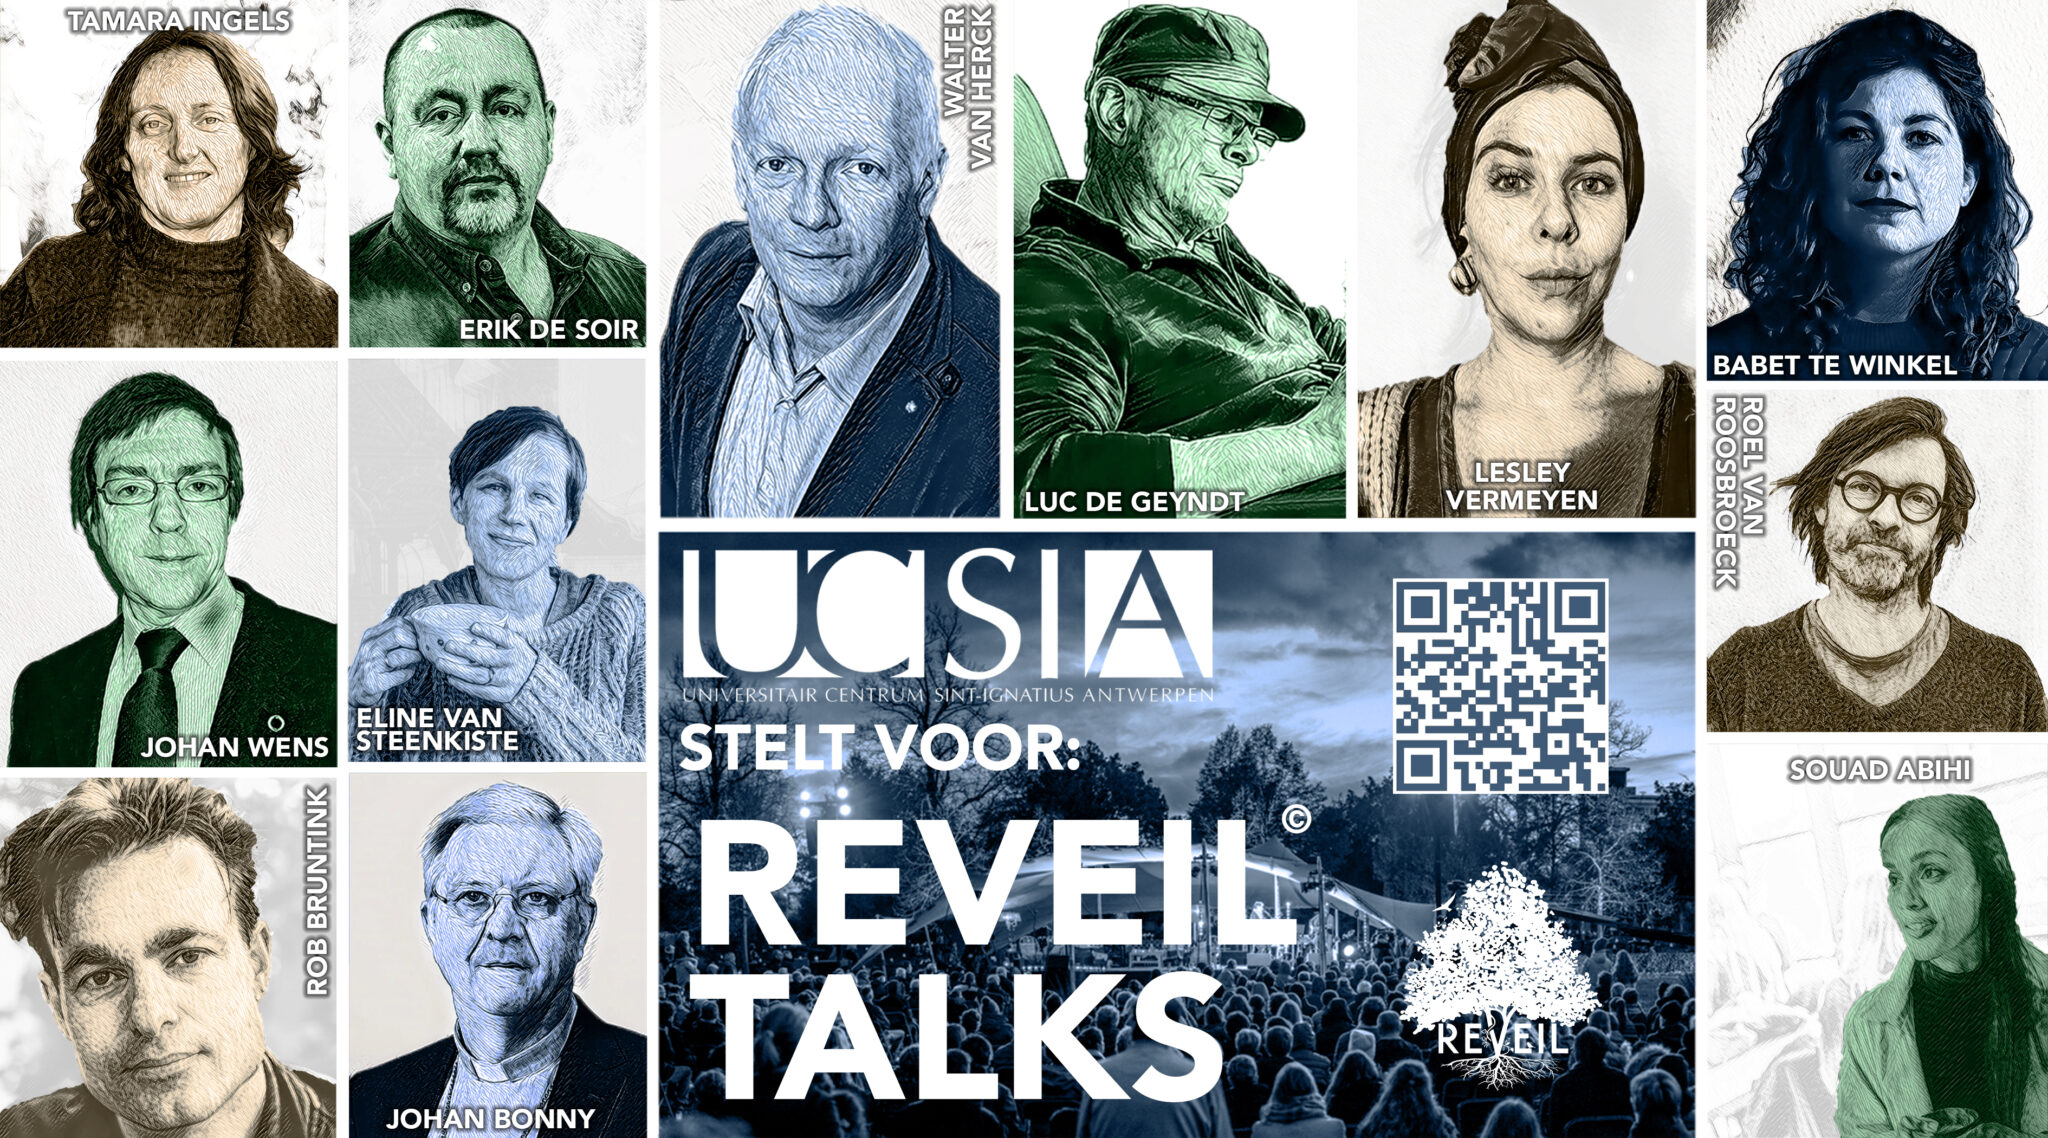 Reveil Talks UCSIA